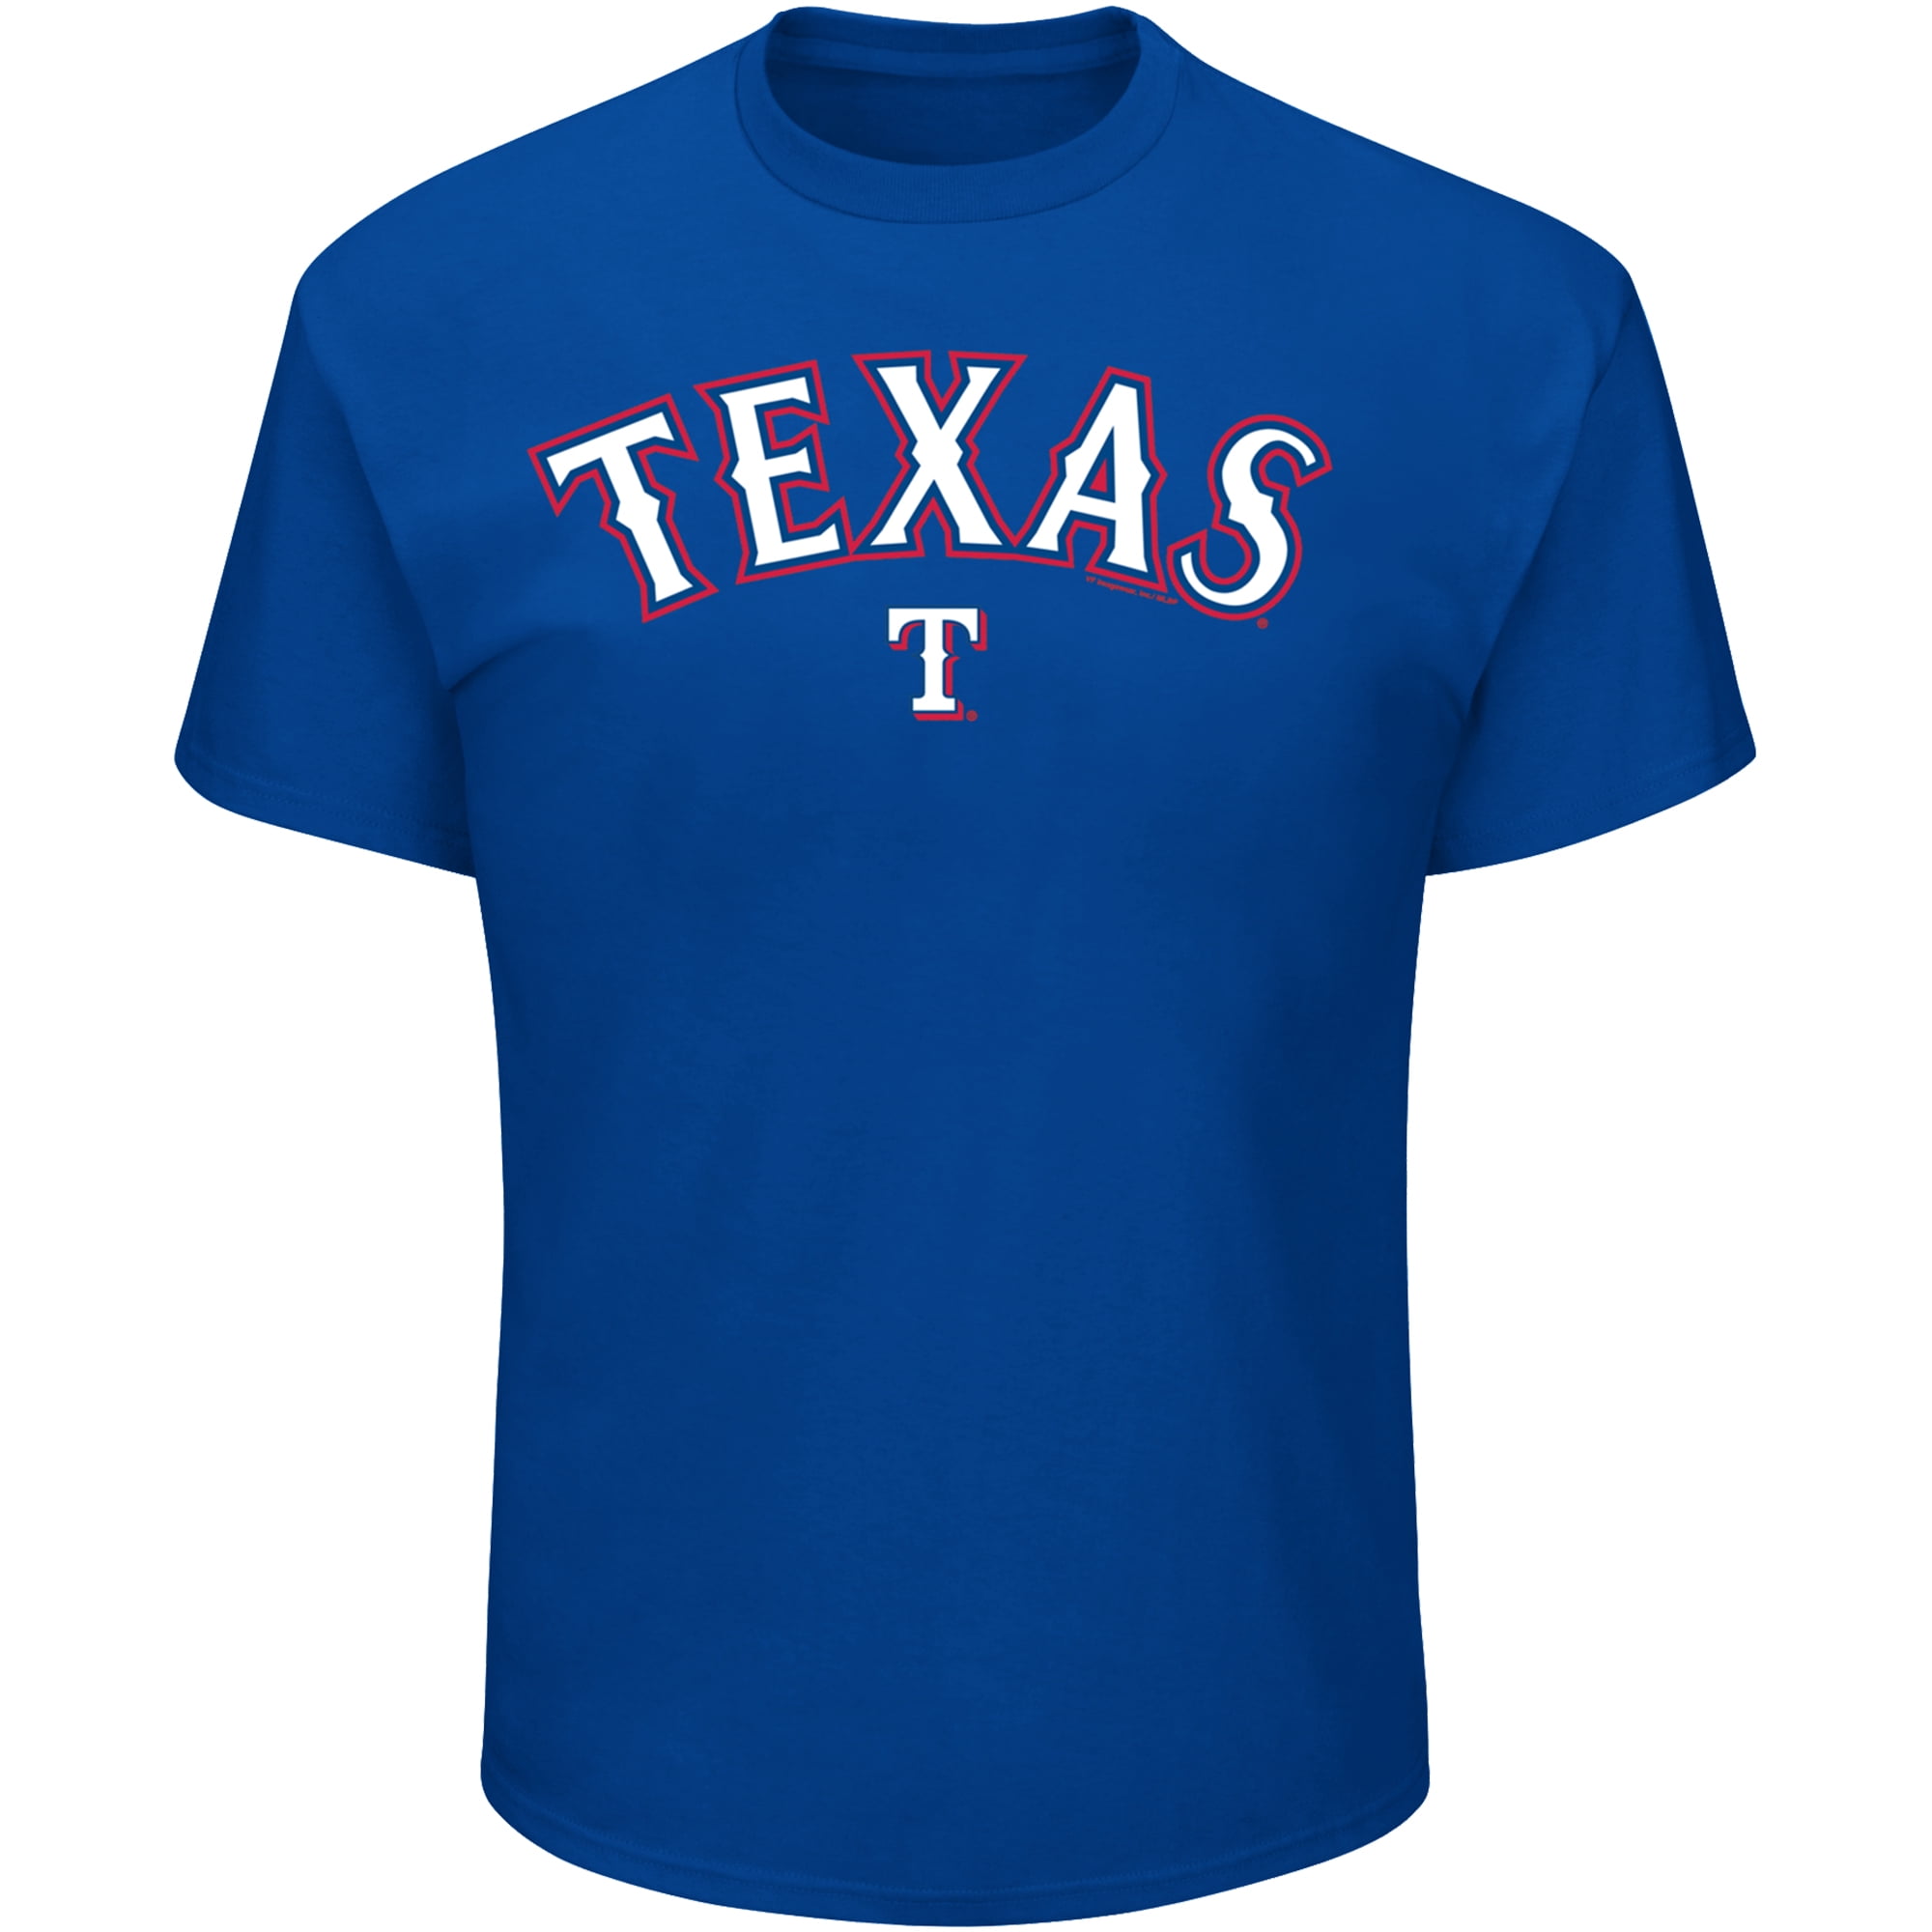 texas rangers shirts for ladies